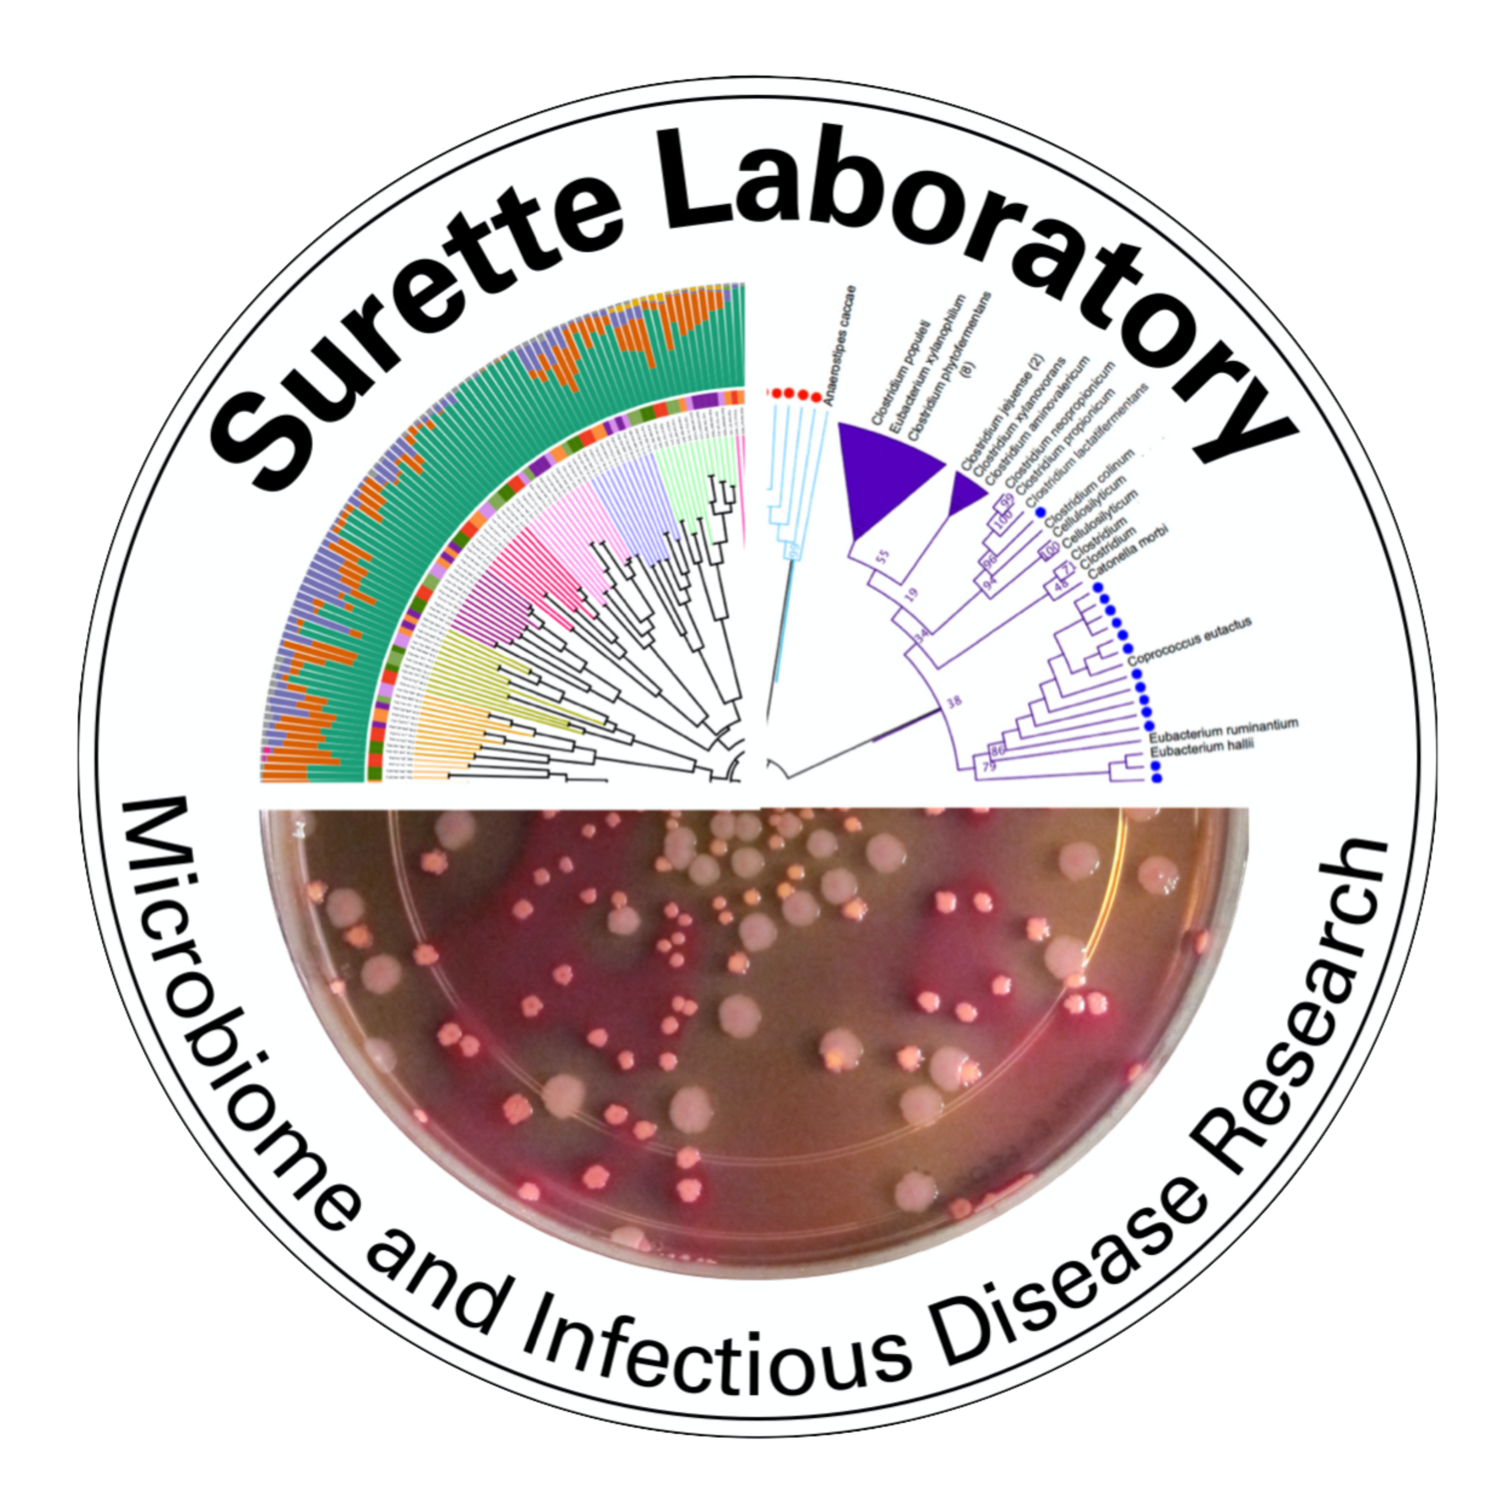 Michael G. Surette Laboratory